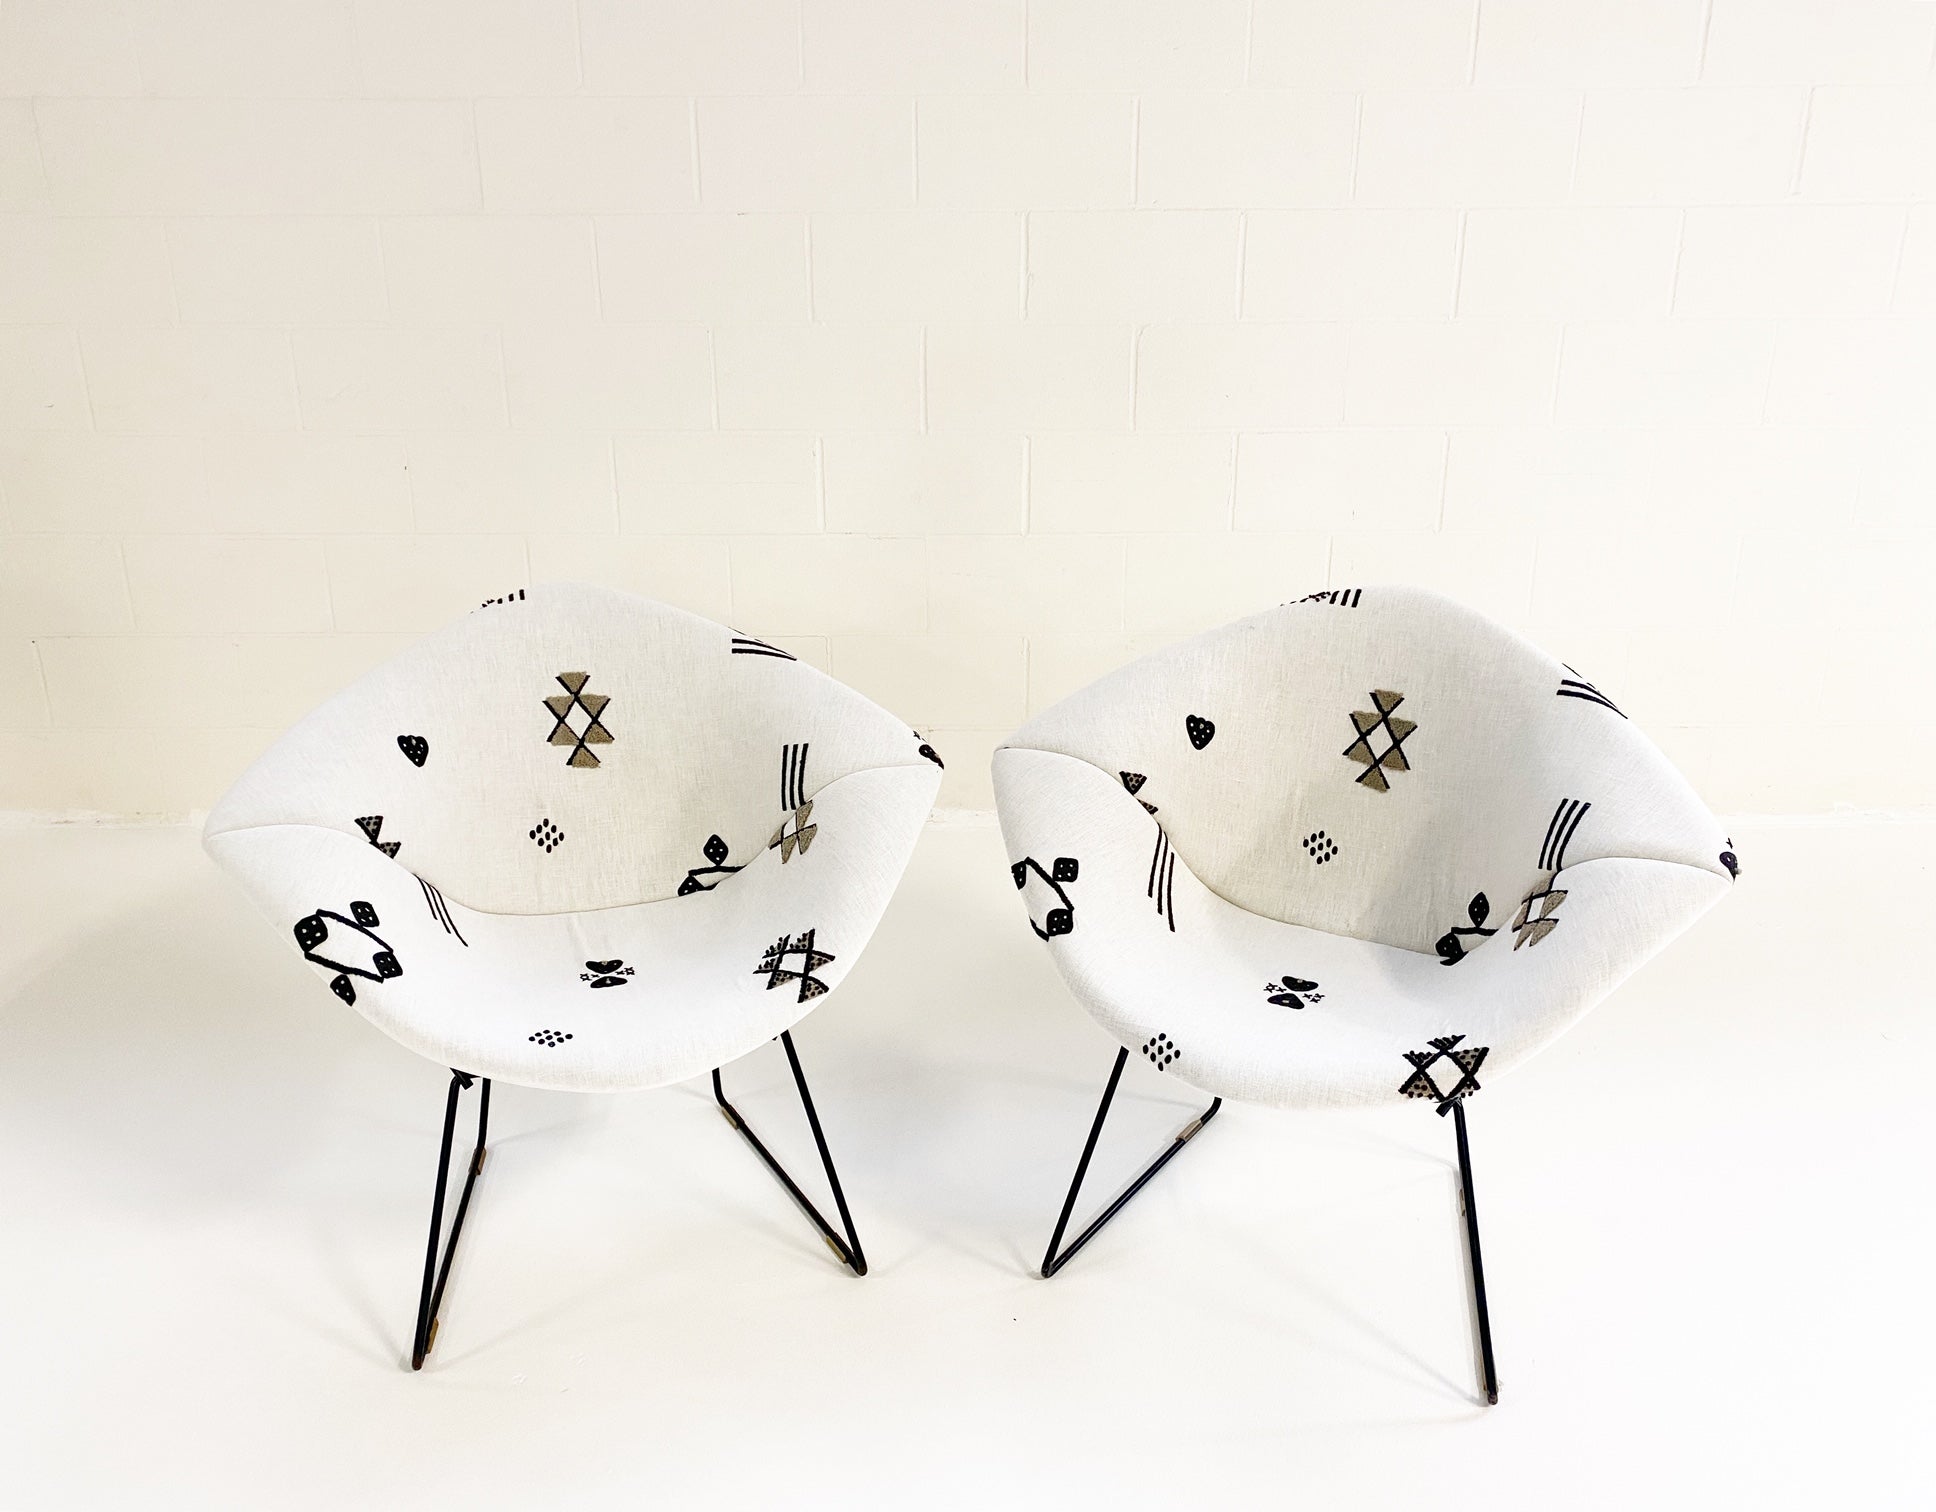 Diamond Chairs in Schumacher Embroidered Linen - FORSYTH